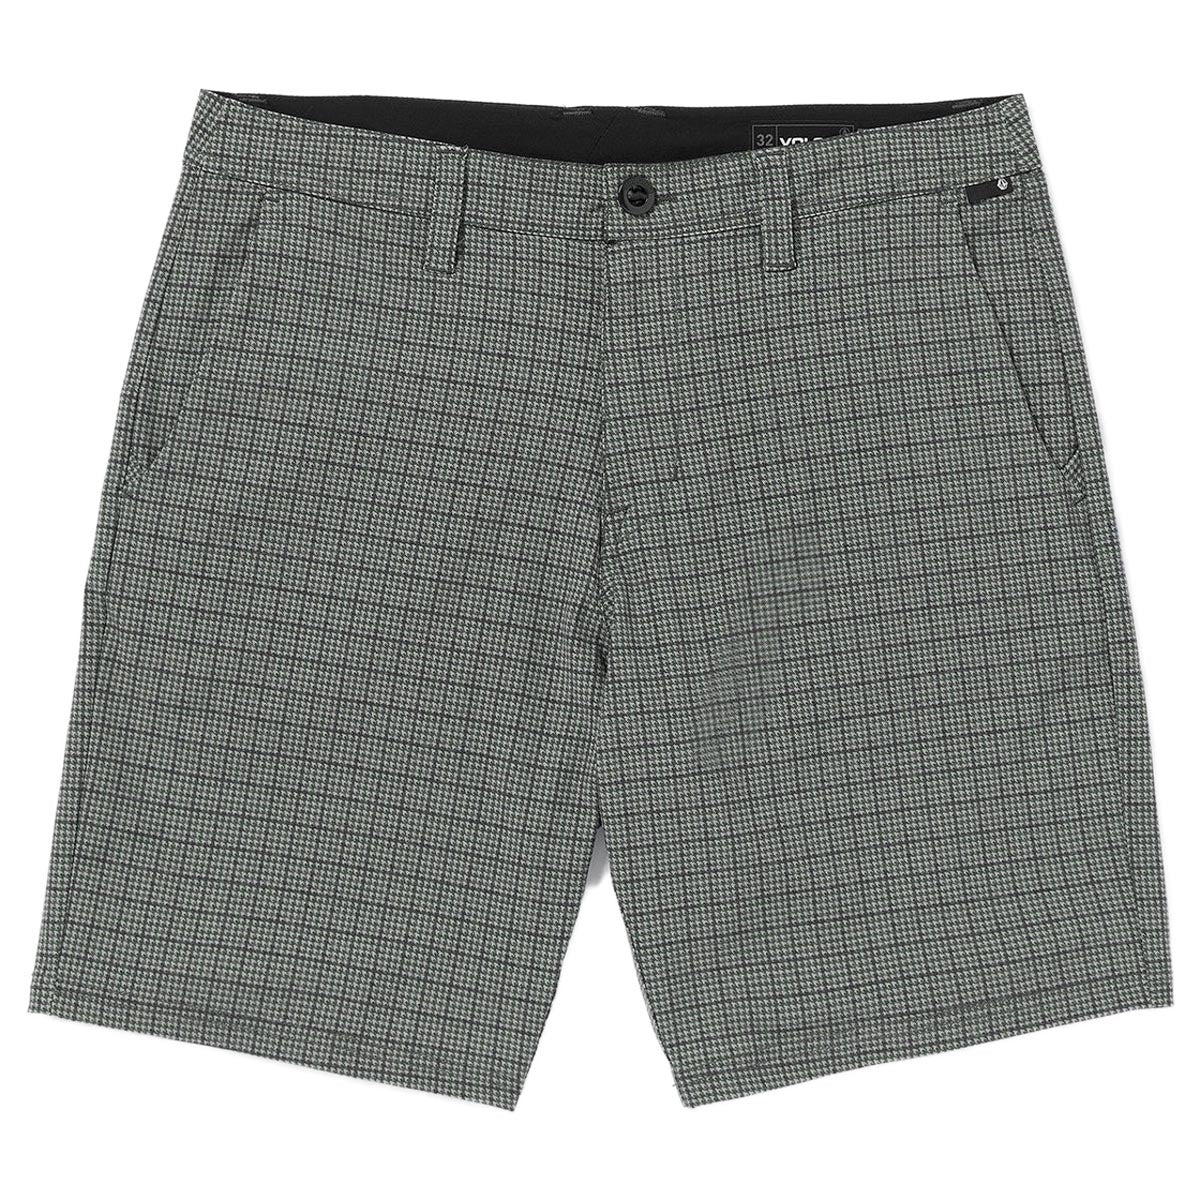 Volcom Mix Frickin Cross Shred 20 Shorts - Asphalt Black image 1